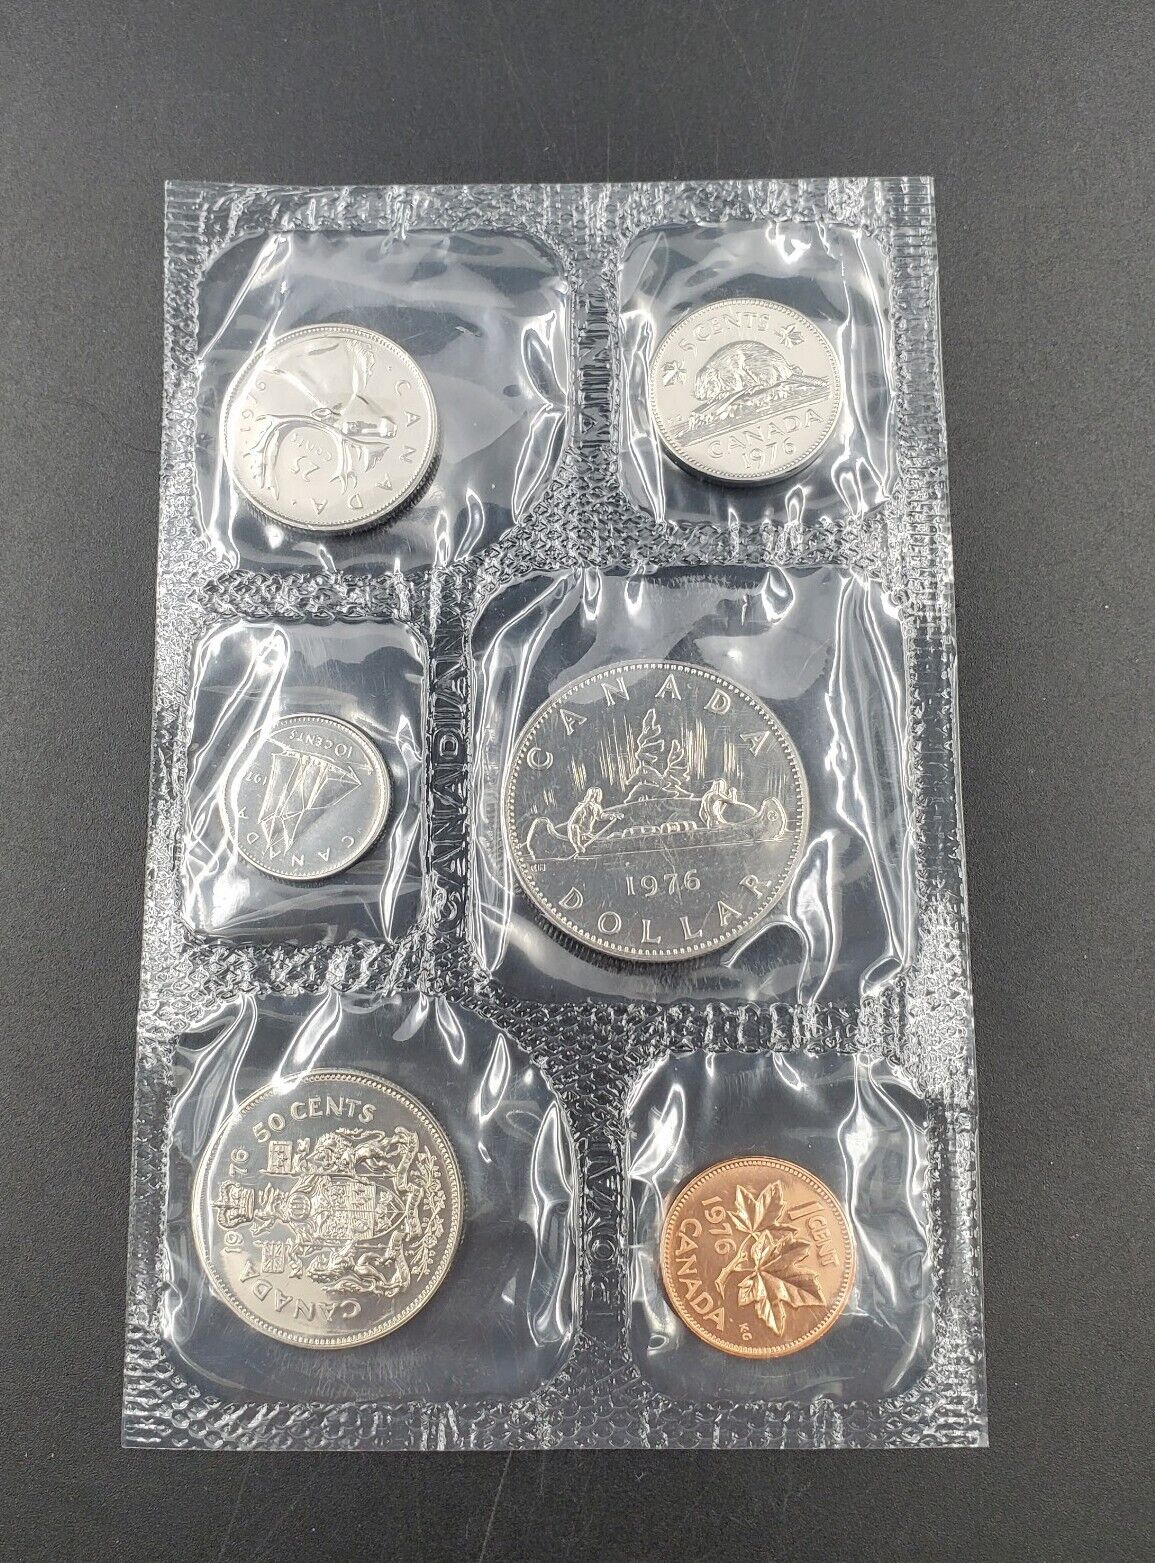 CANADA 1976 Royal Canadian Mint Uncirculated Proof Like Set